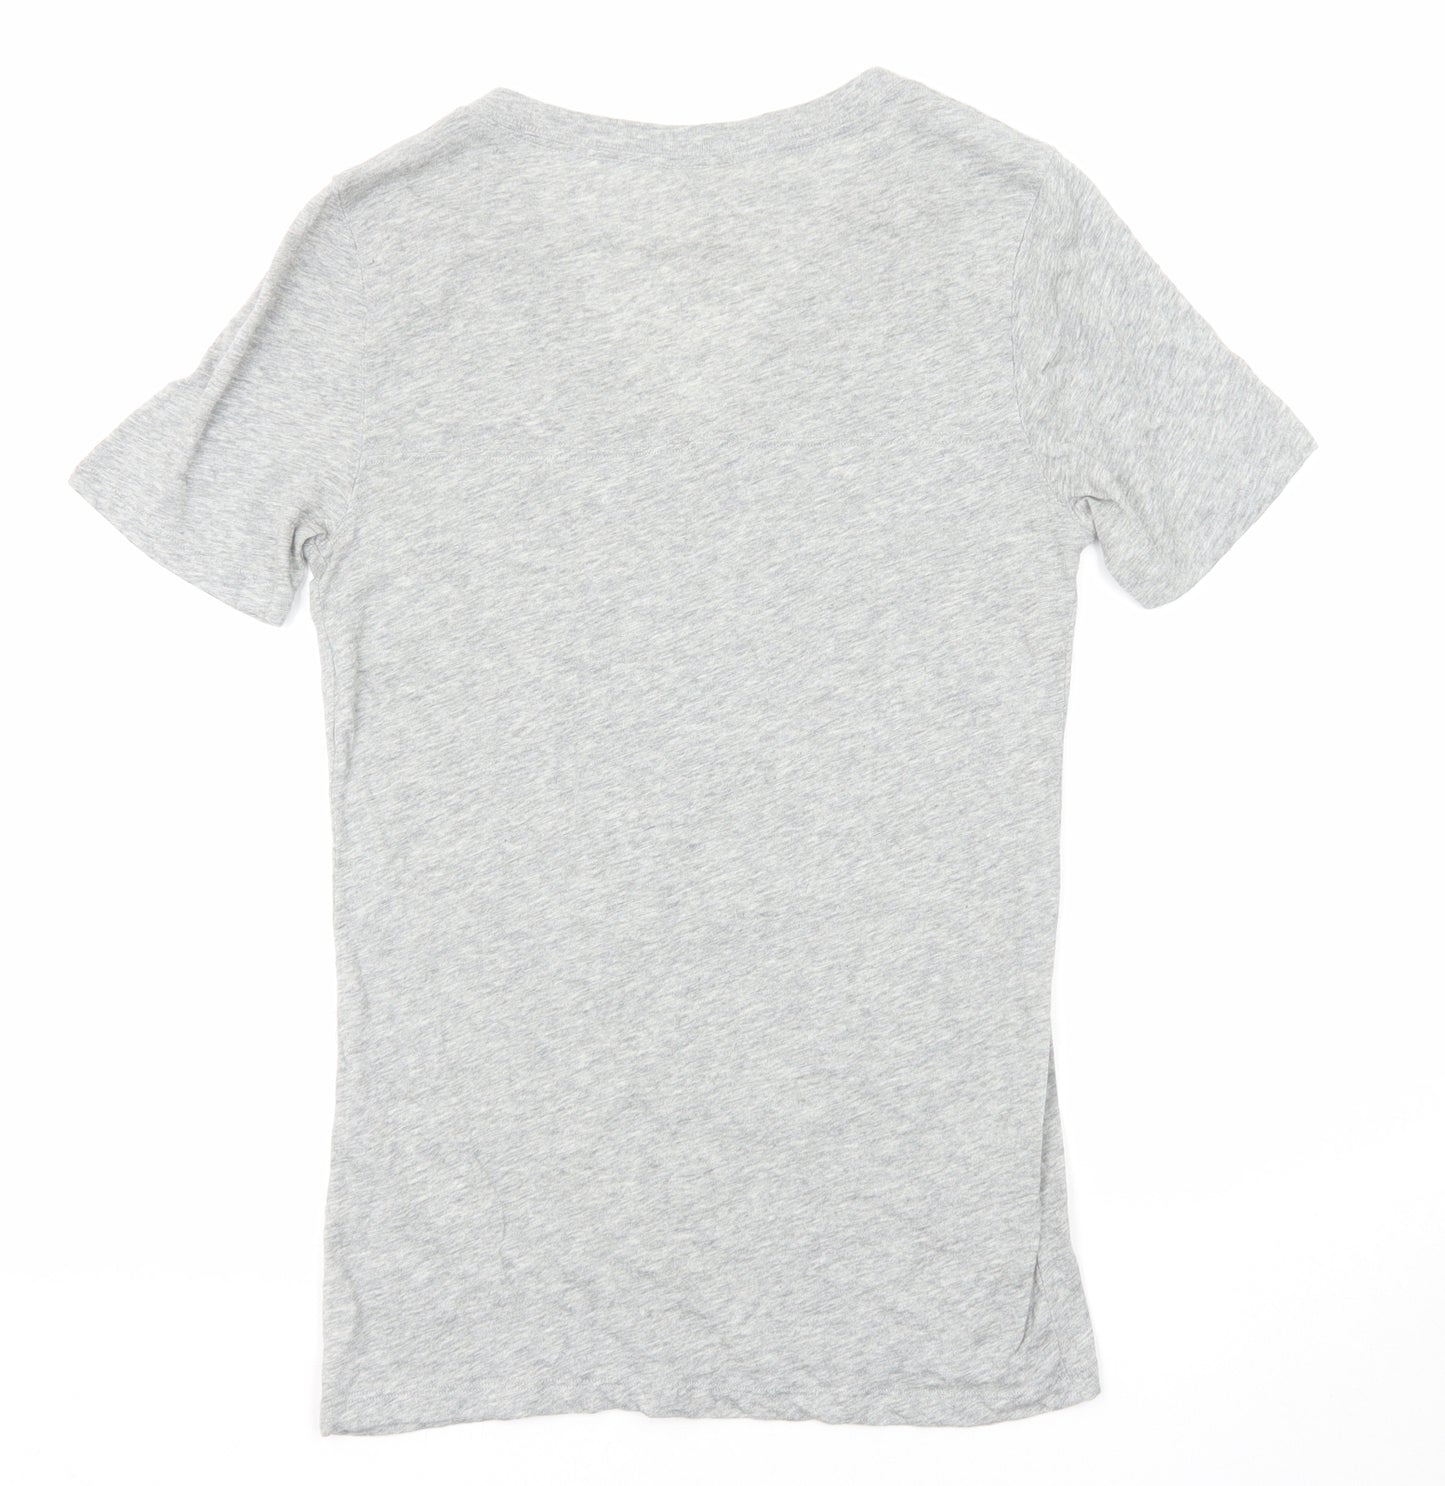 Victoria's Secret Womens Grey Cotton Basic T-Shirt Size M V-Neck - New York City